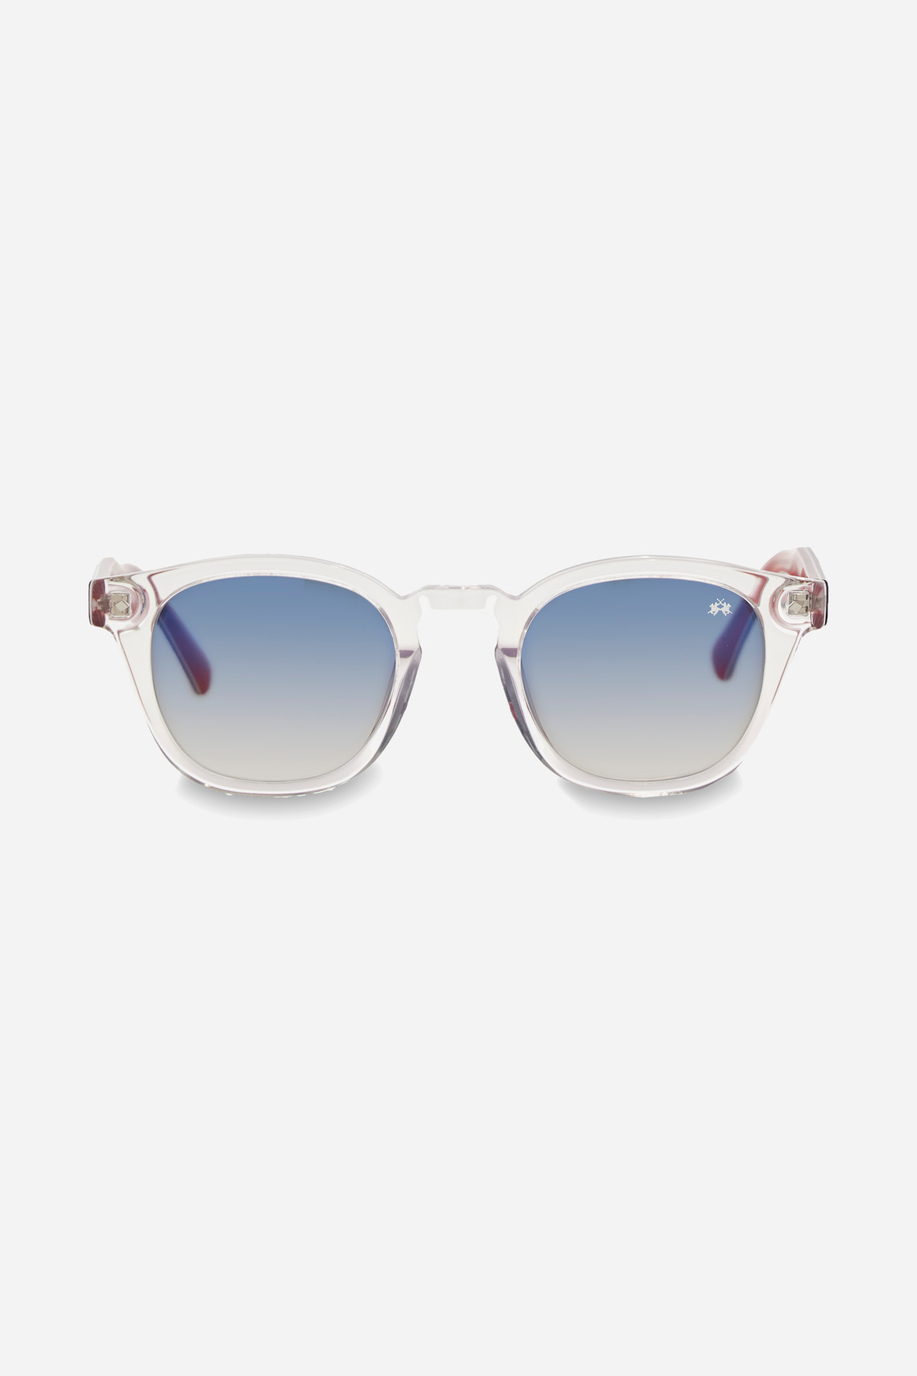 Pantos model sunglasses - Glasses | La Martina - Official Online Shop